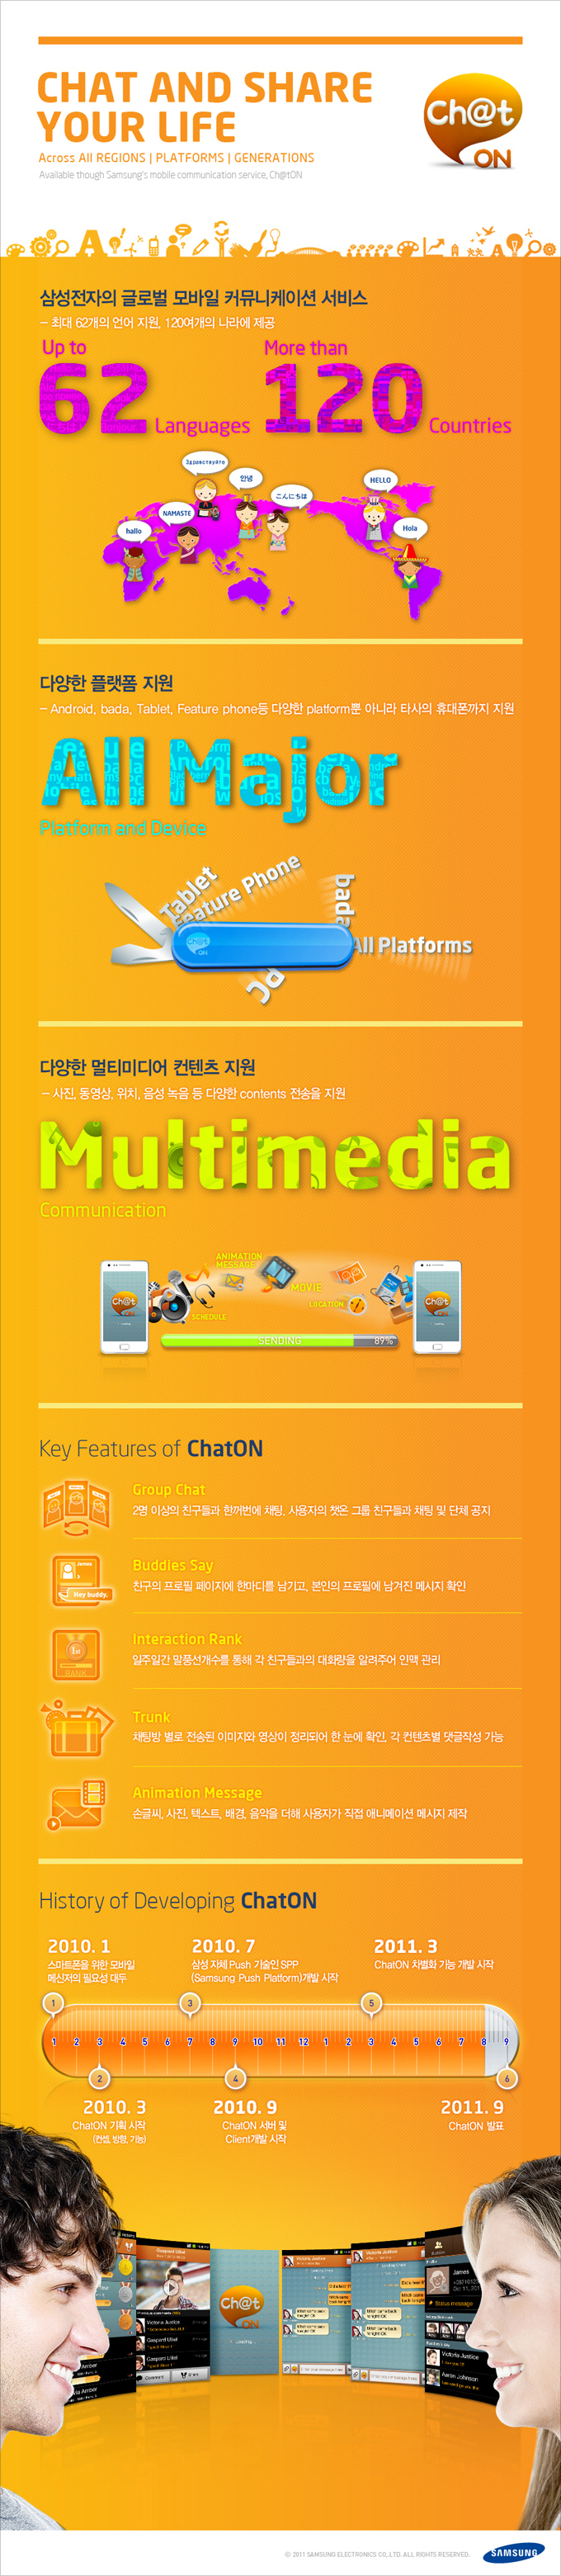 Samsung'dan platformlar arası mesajlaşma servisi; ChatON